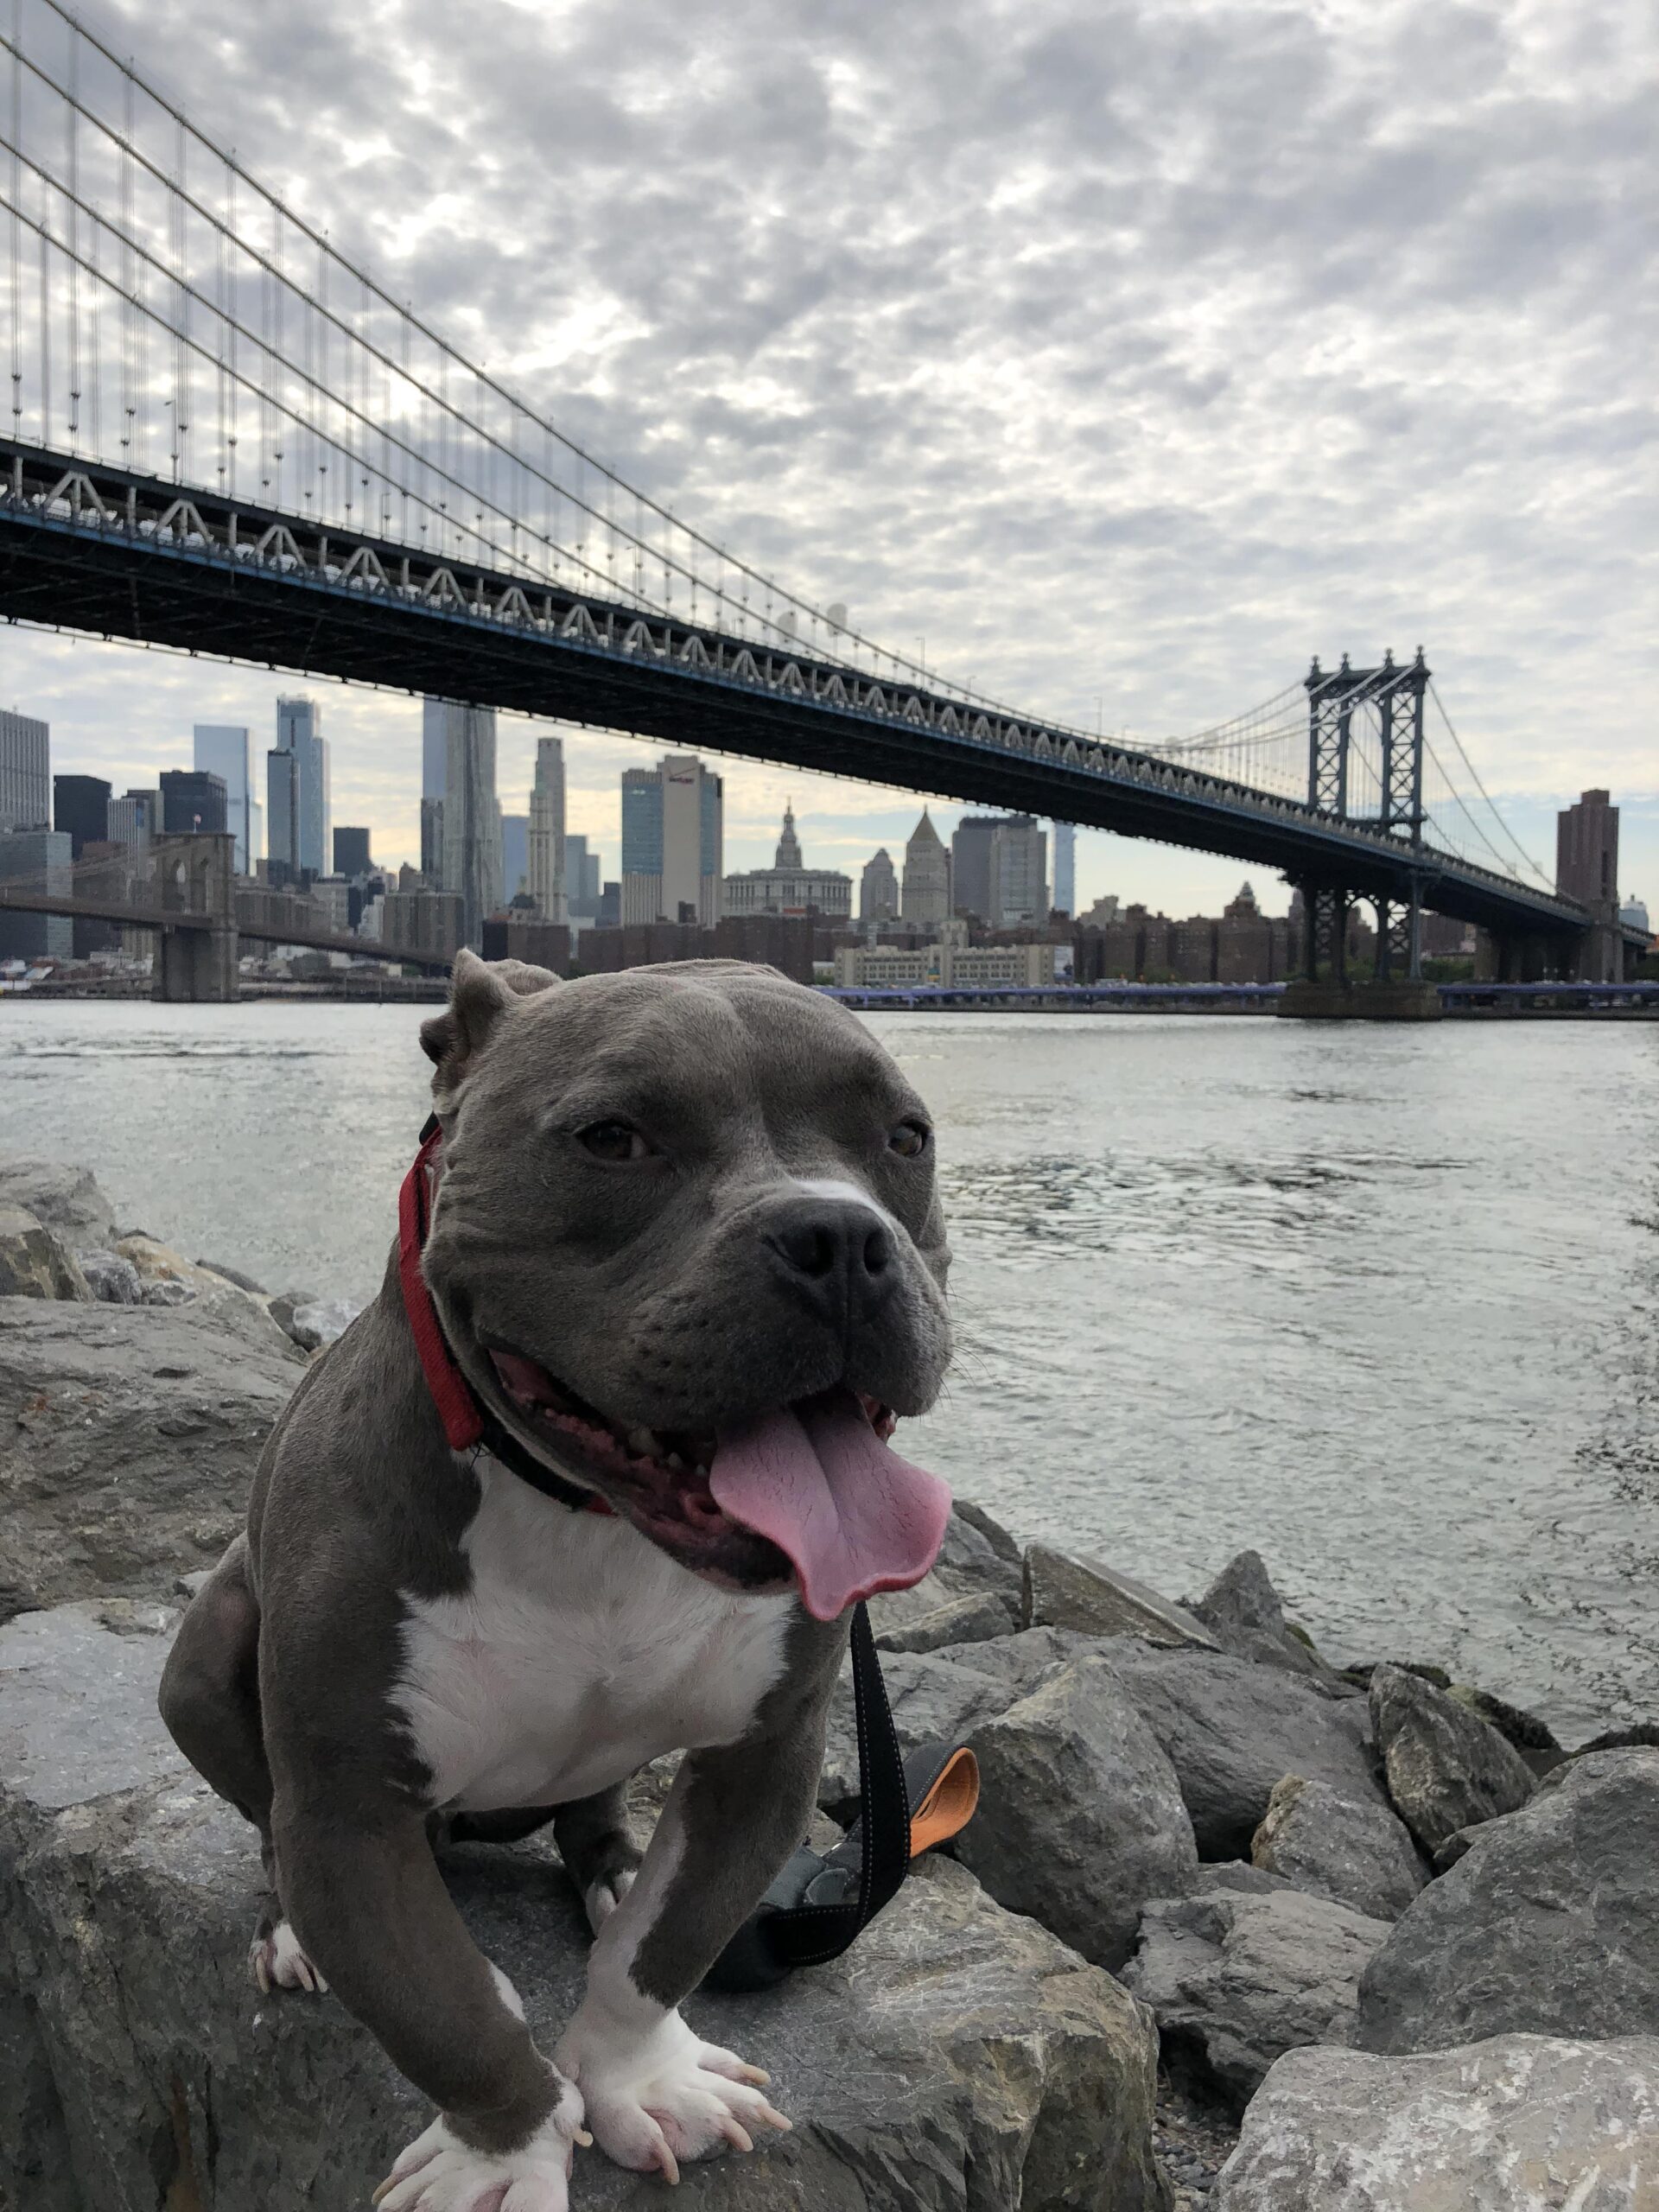 A gray dog on some rocks under the Manhattan Bridge